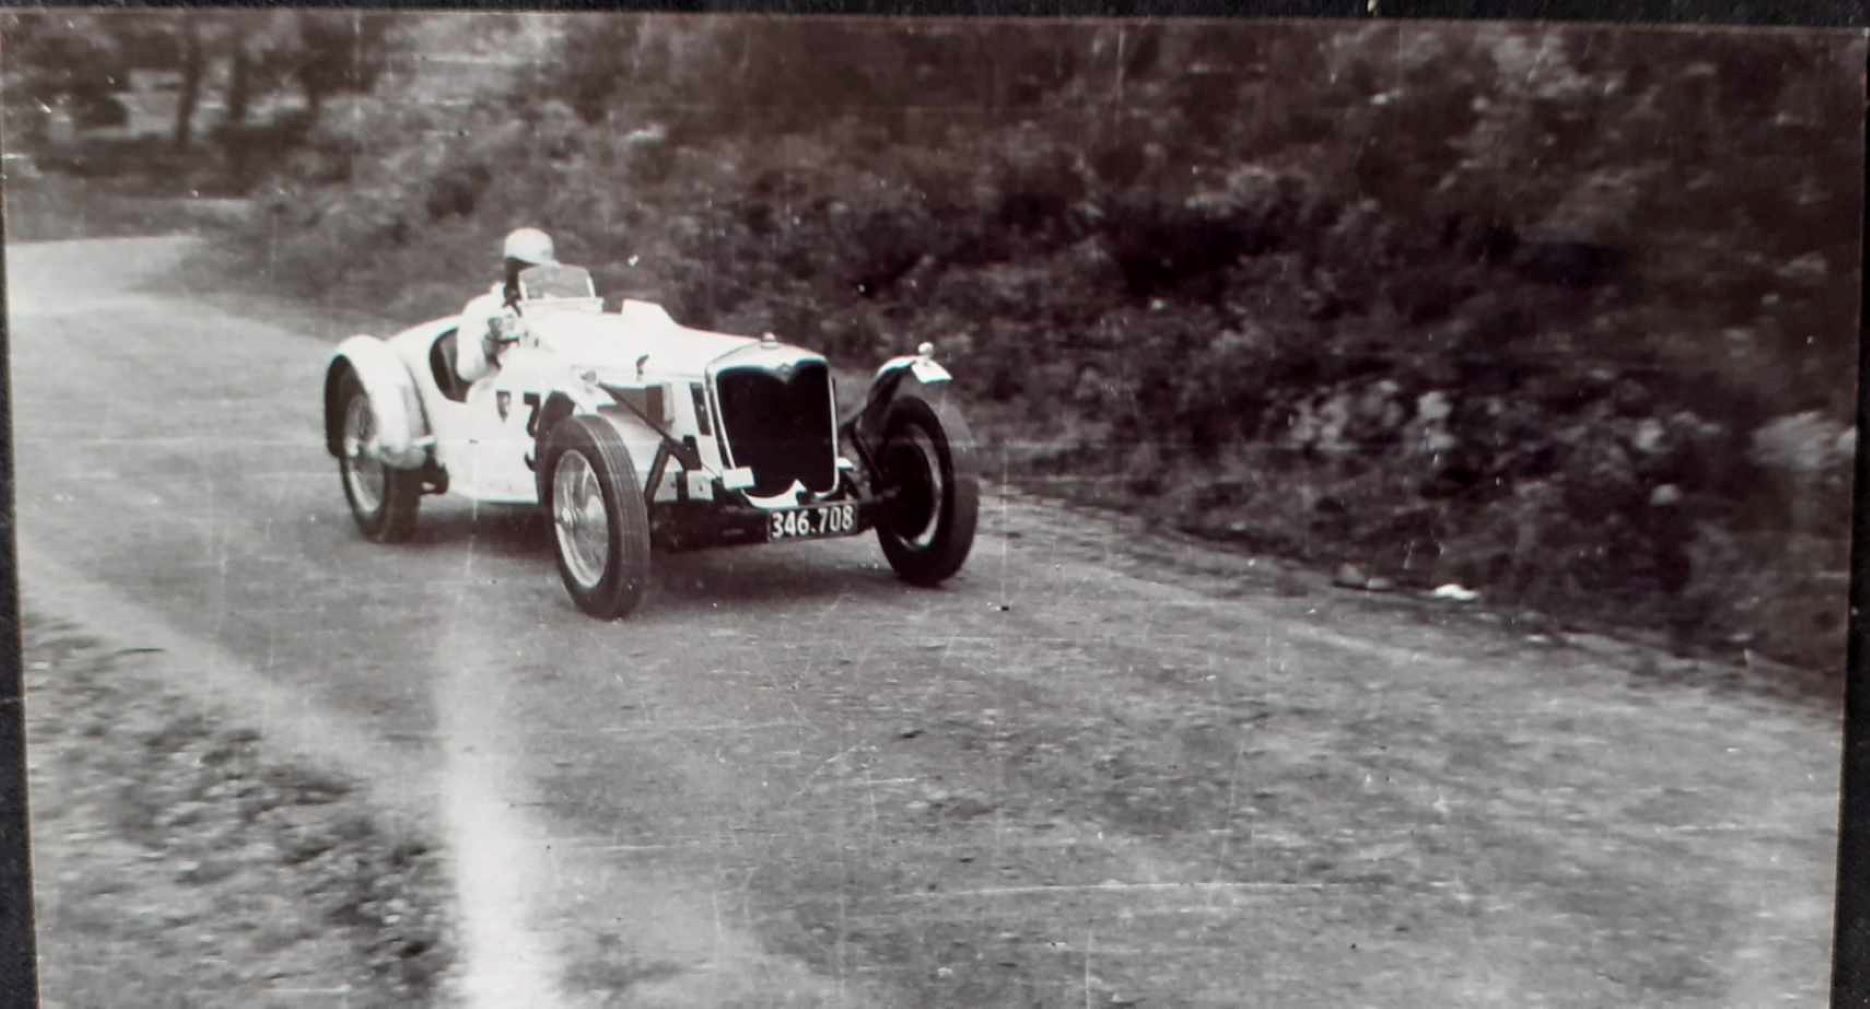 Name:  NSCC 1950 #0122 Riley Race #3 Q at Hill Climb - 346.708 1951 -56 plate 1950's - image Graeme Wel.jpg
Views: 213
Size:  178.4 KB